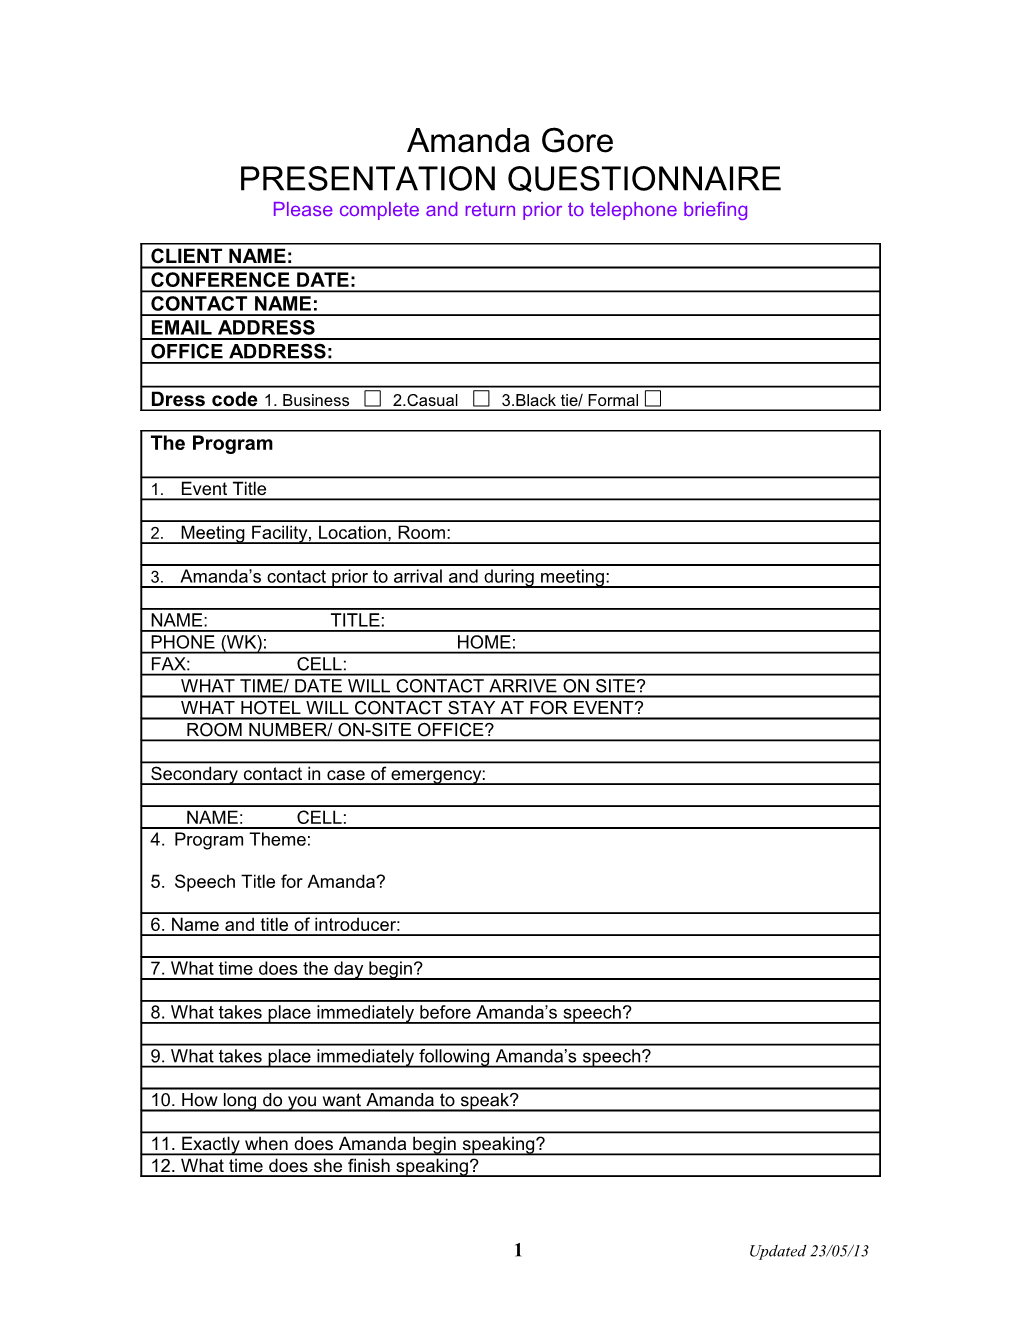 Amanda Gore Presentation Questionnaire